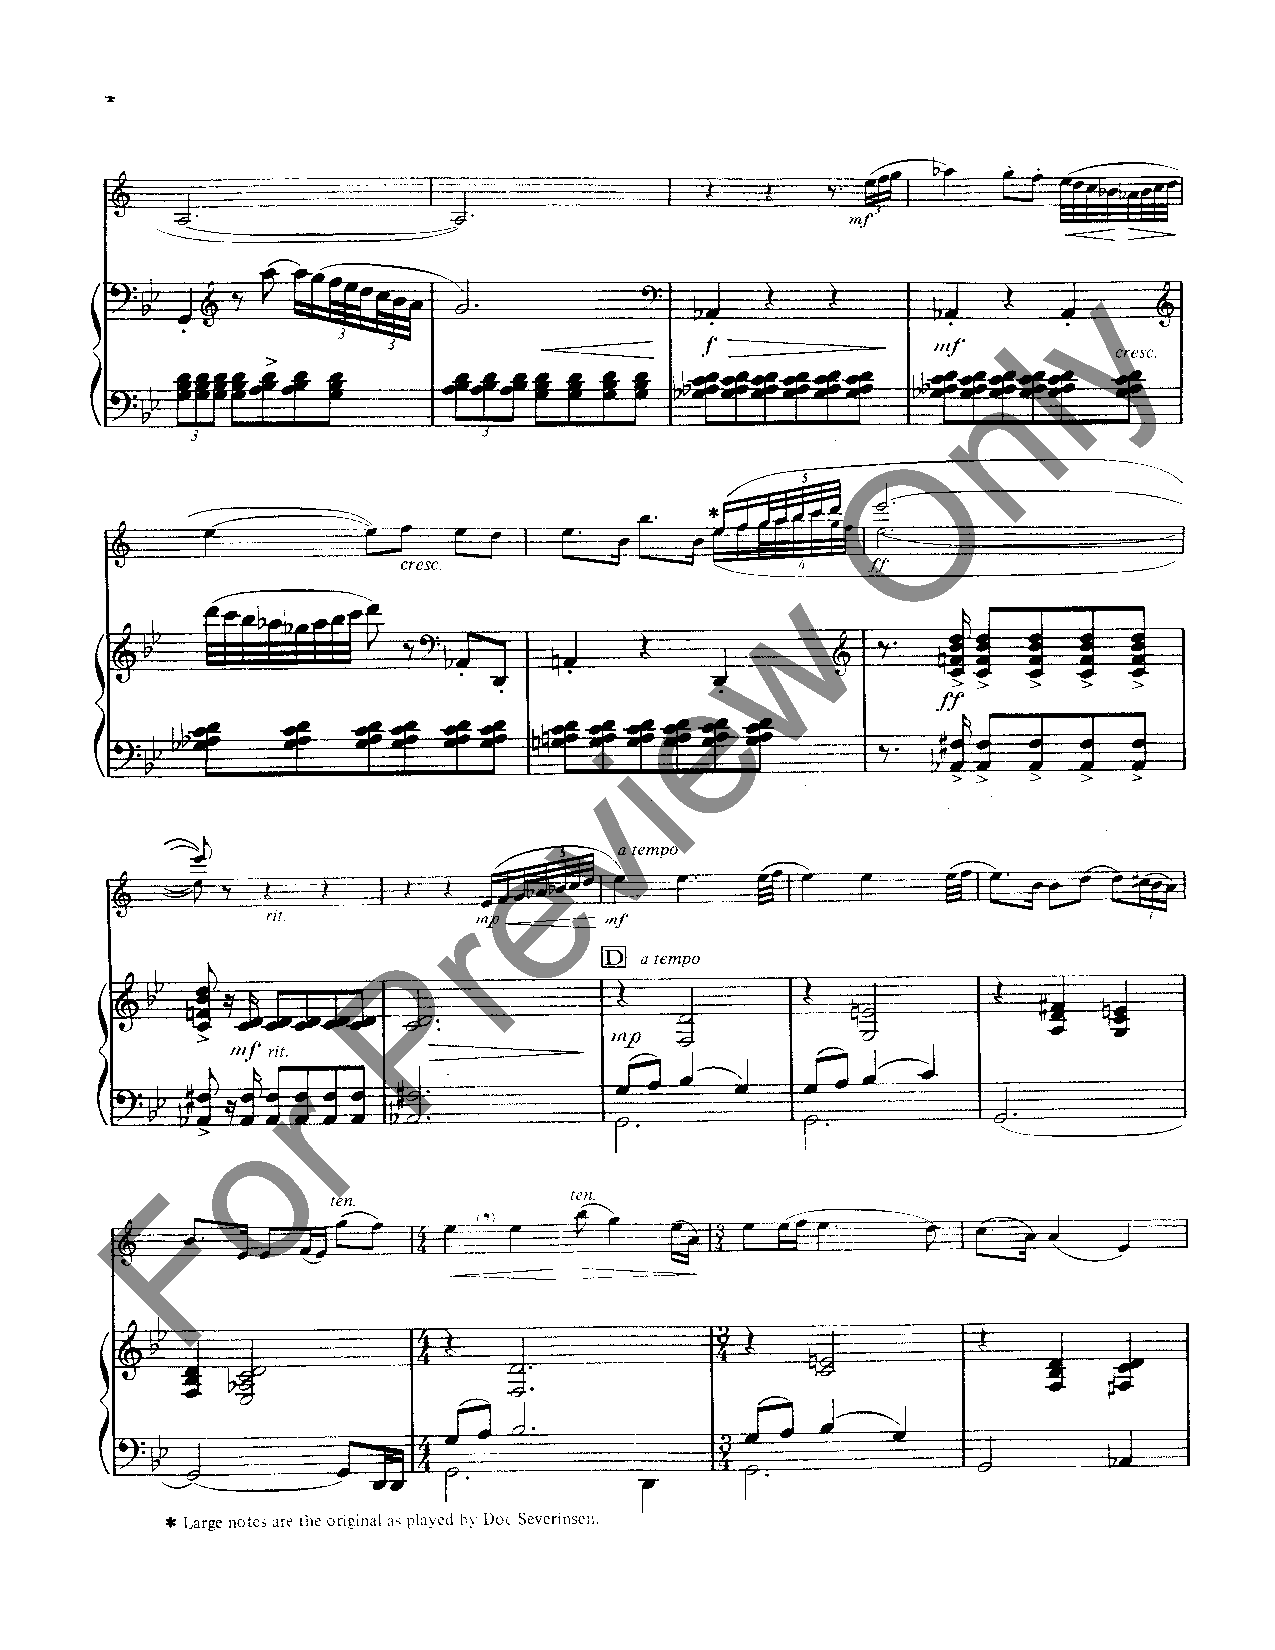 Fantasy for Trumpet Solo with Piano